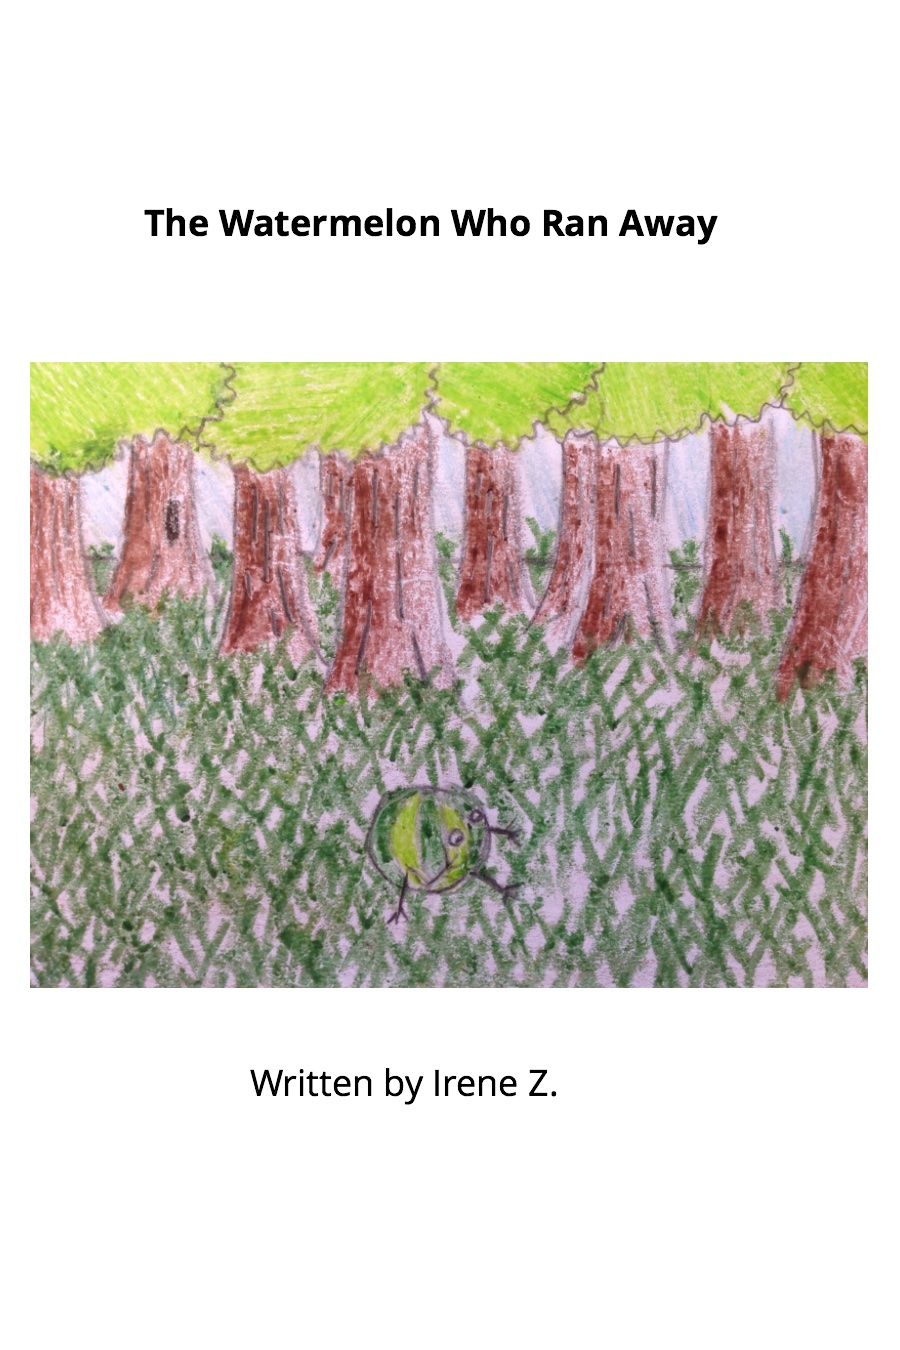 The Watermelon Who Ran Away by Irene Z